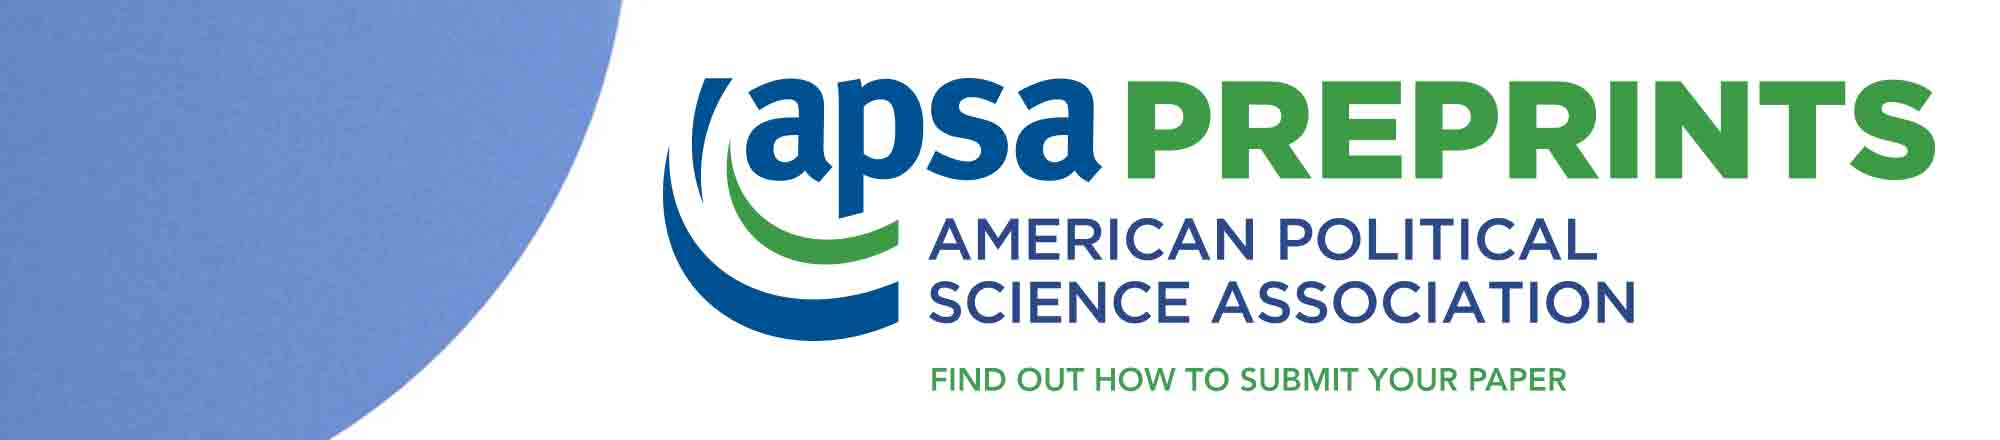 APSA Preprints banner